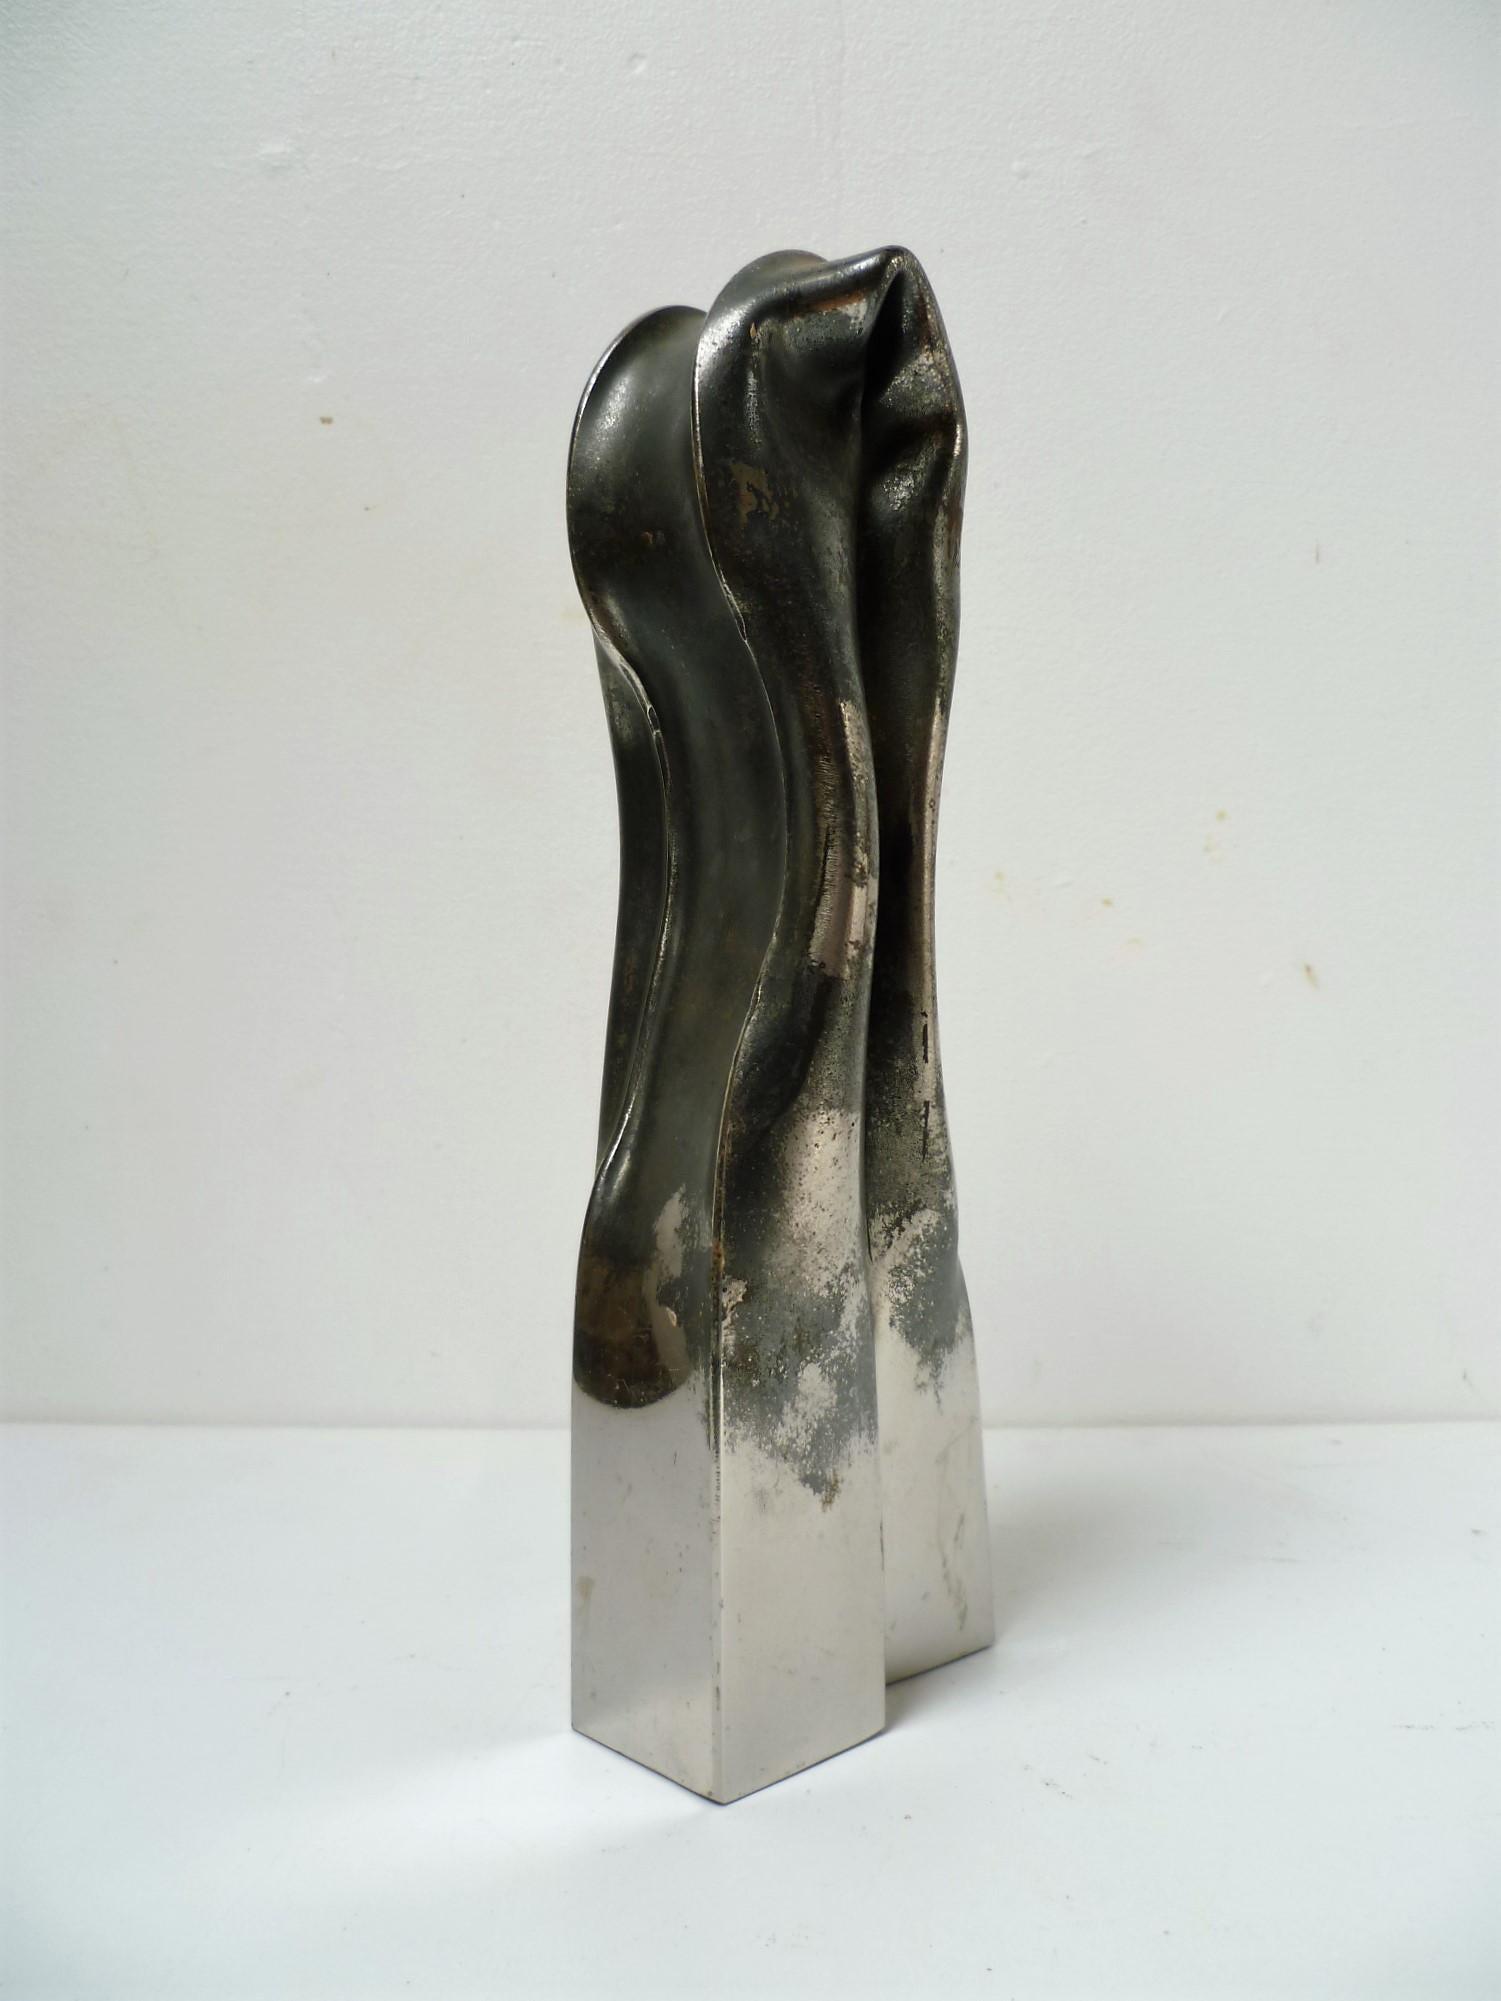 Art contemporain français par Frdrick Mazoir - Magmatisme 06 - Sculpture de Frédérick Mazoir 